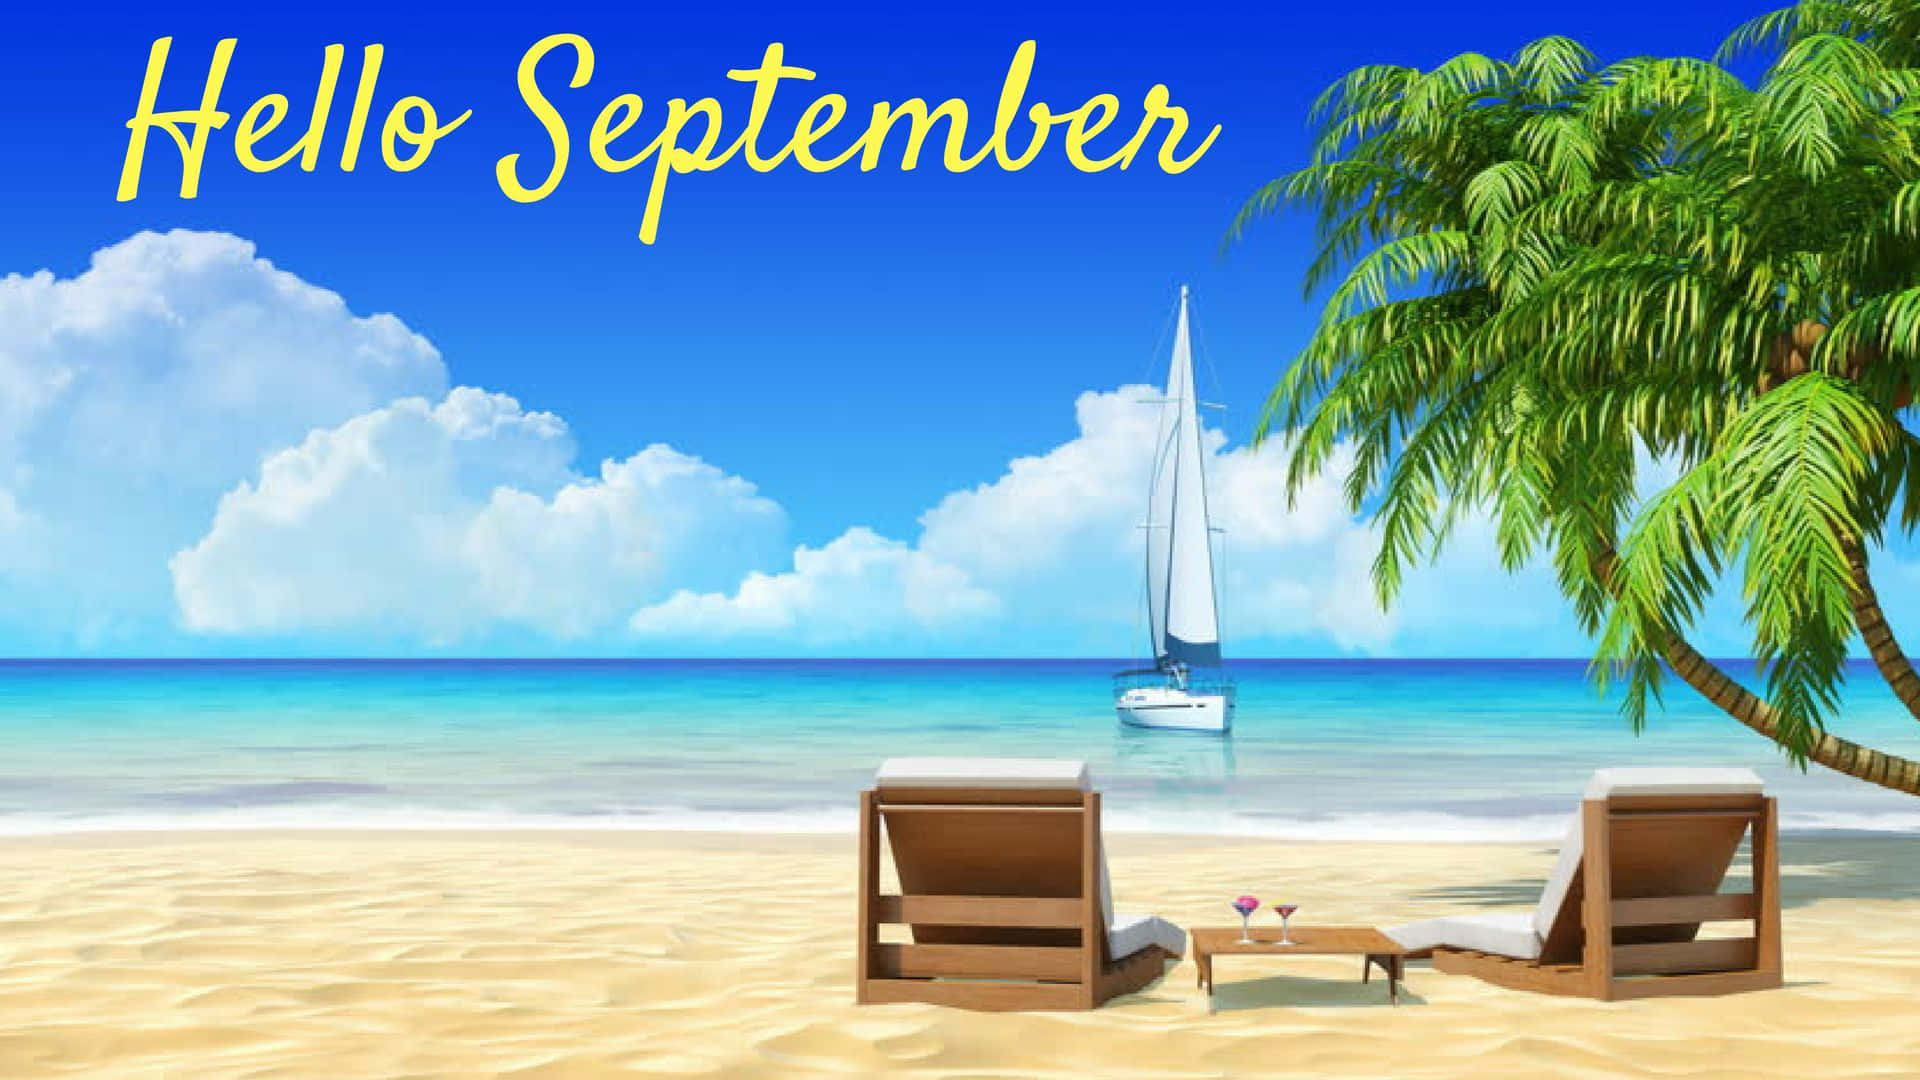 Hello September Greeting Animated Beach Wallpaper